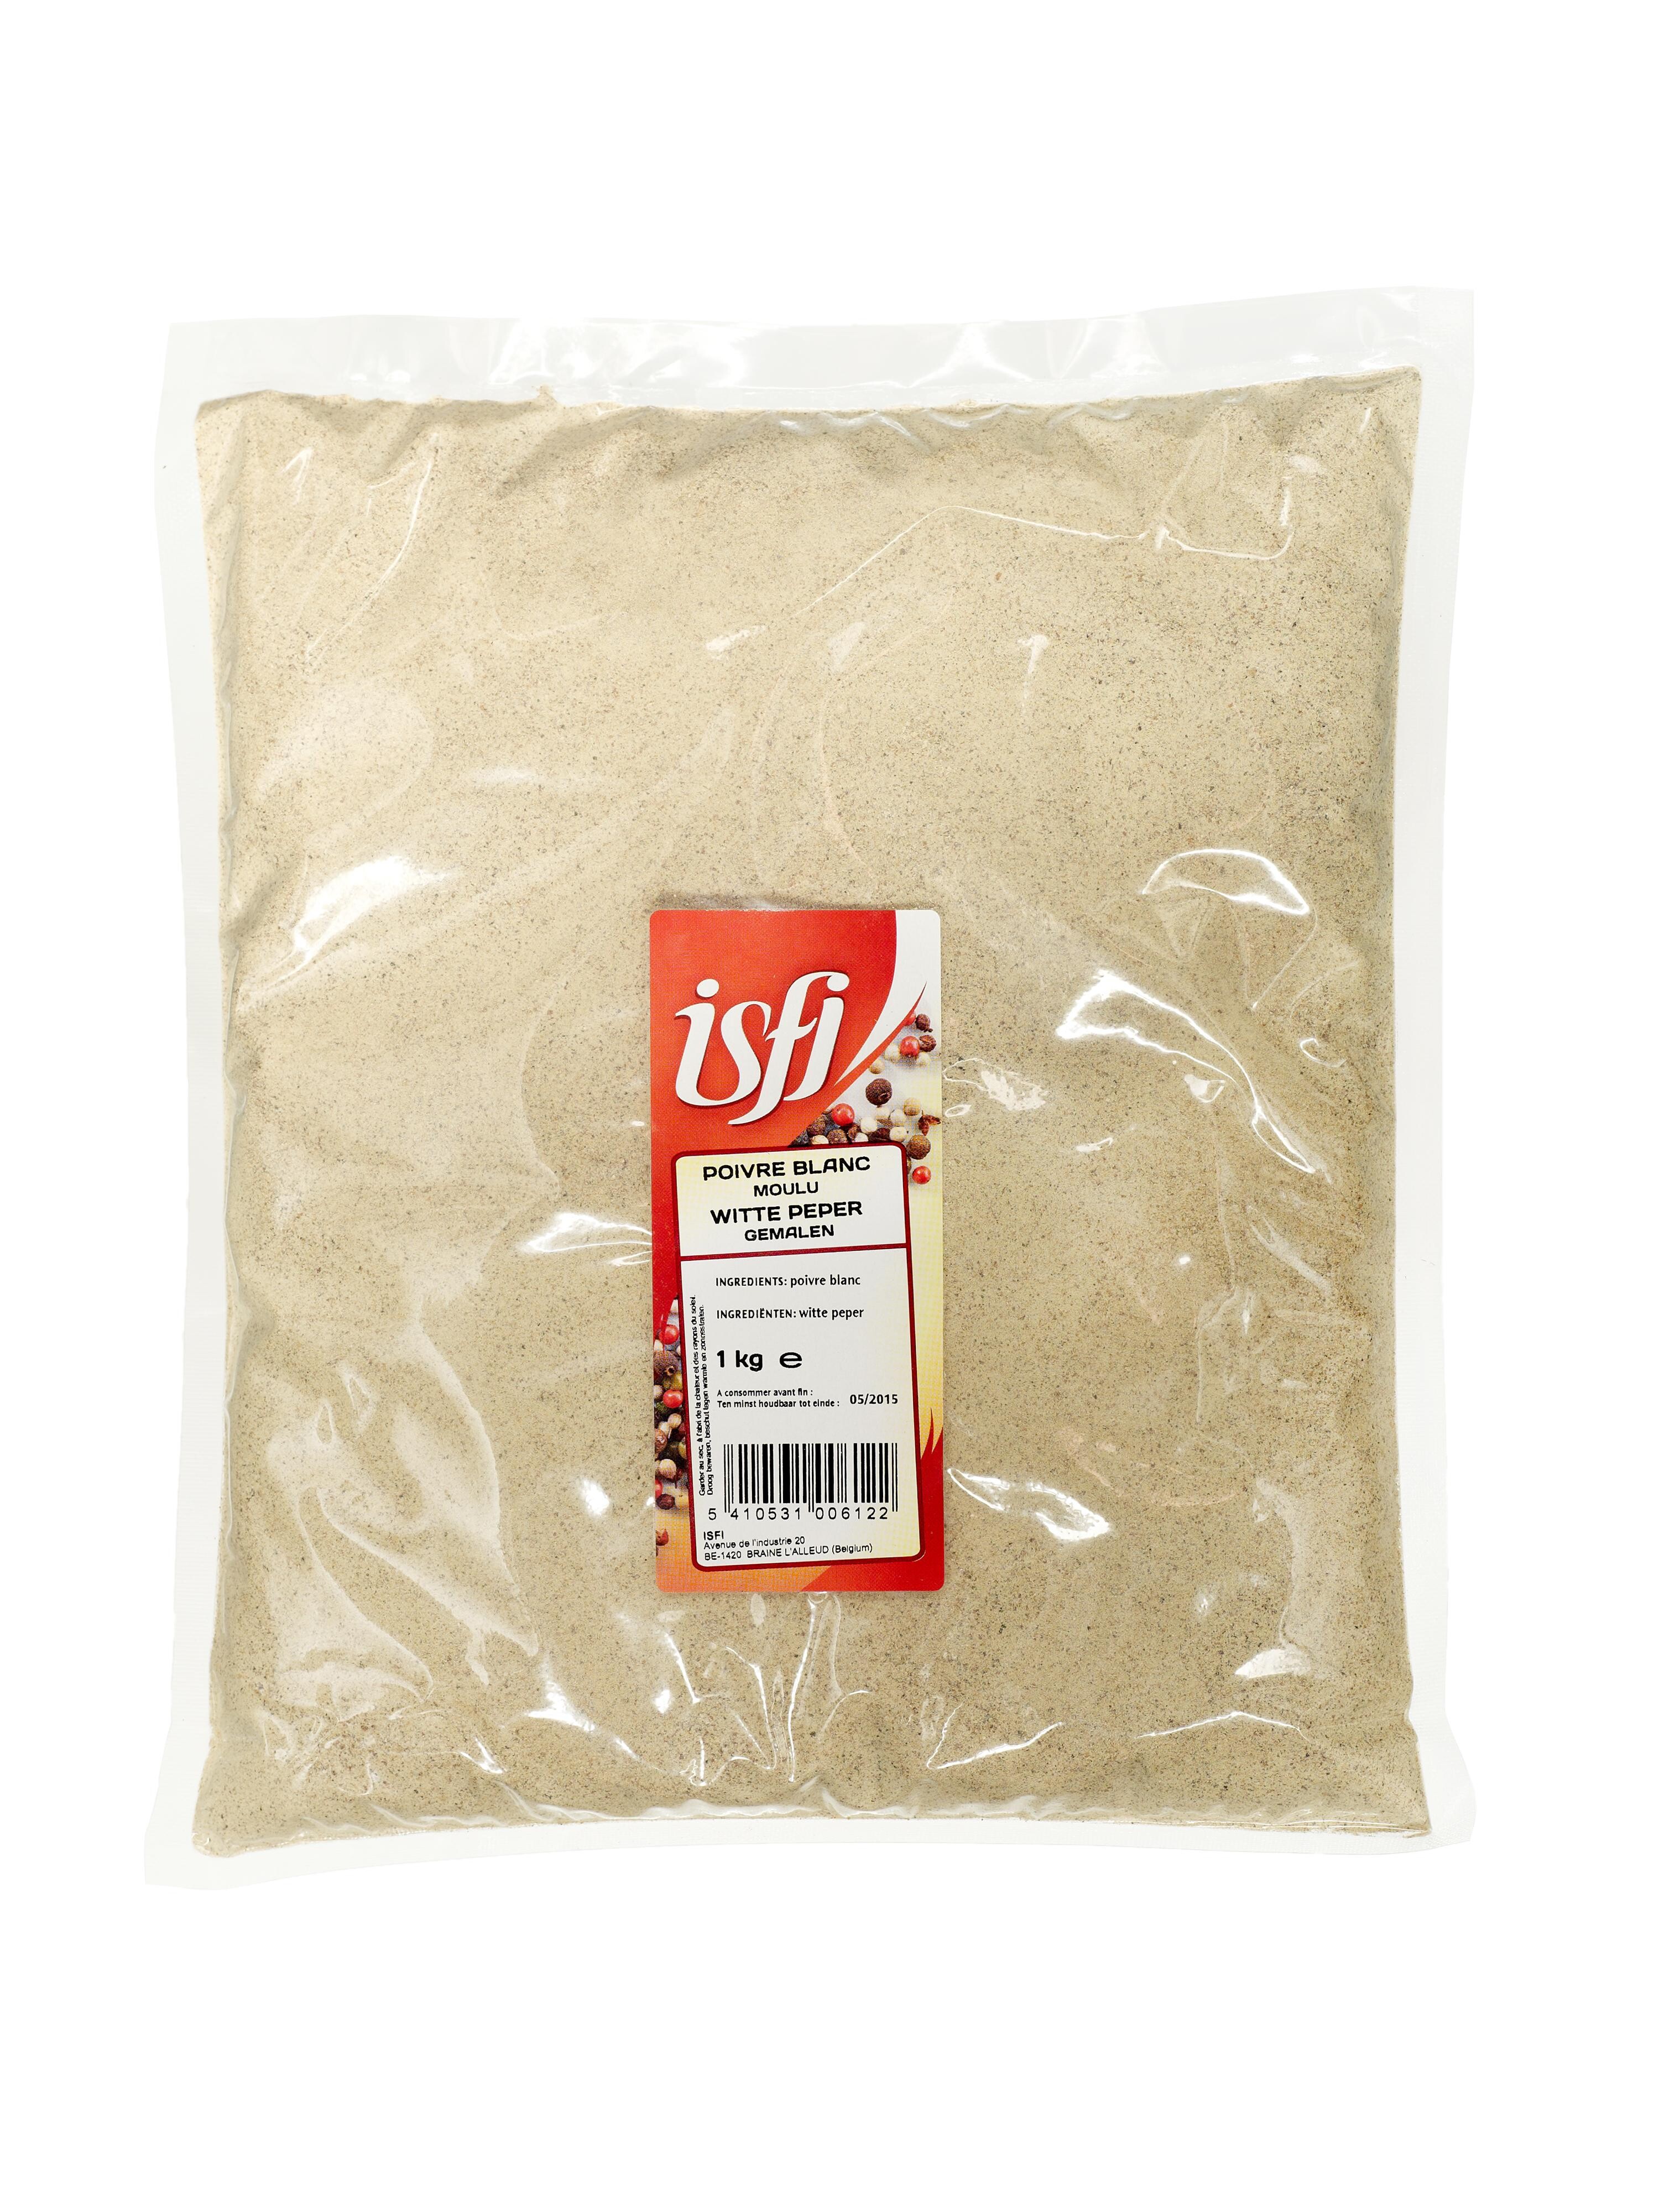 White Pepper ground 1kg cello bag Isfi